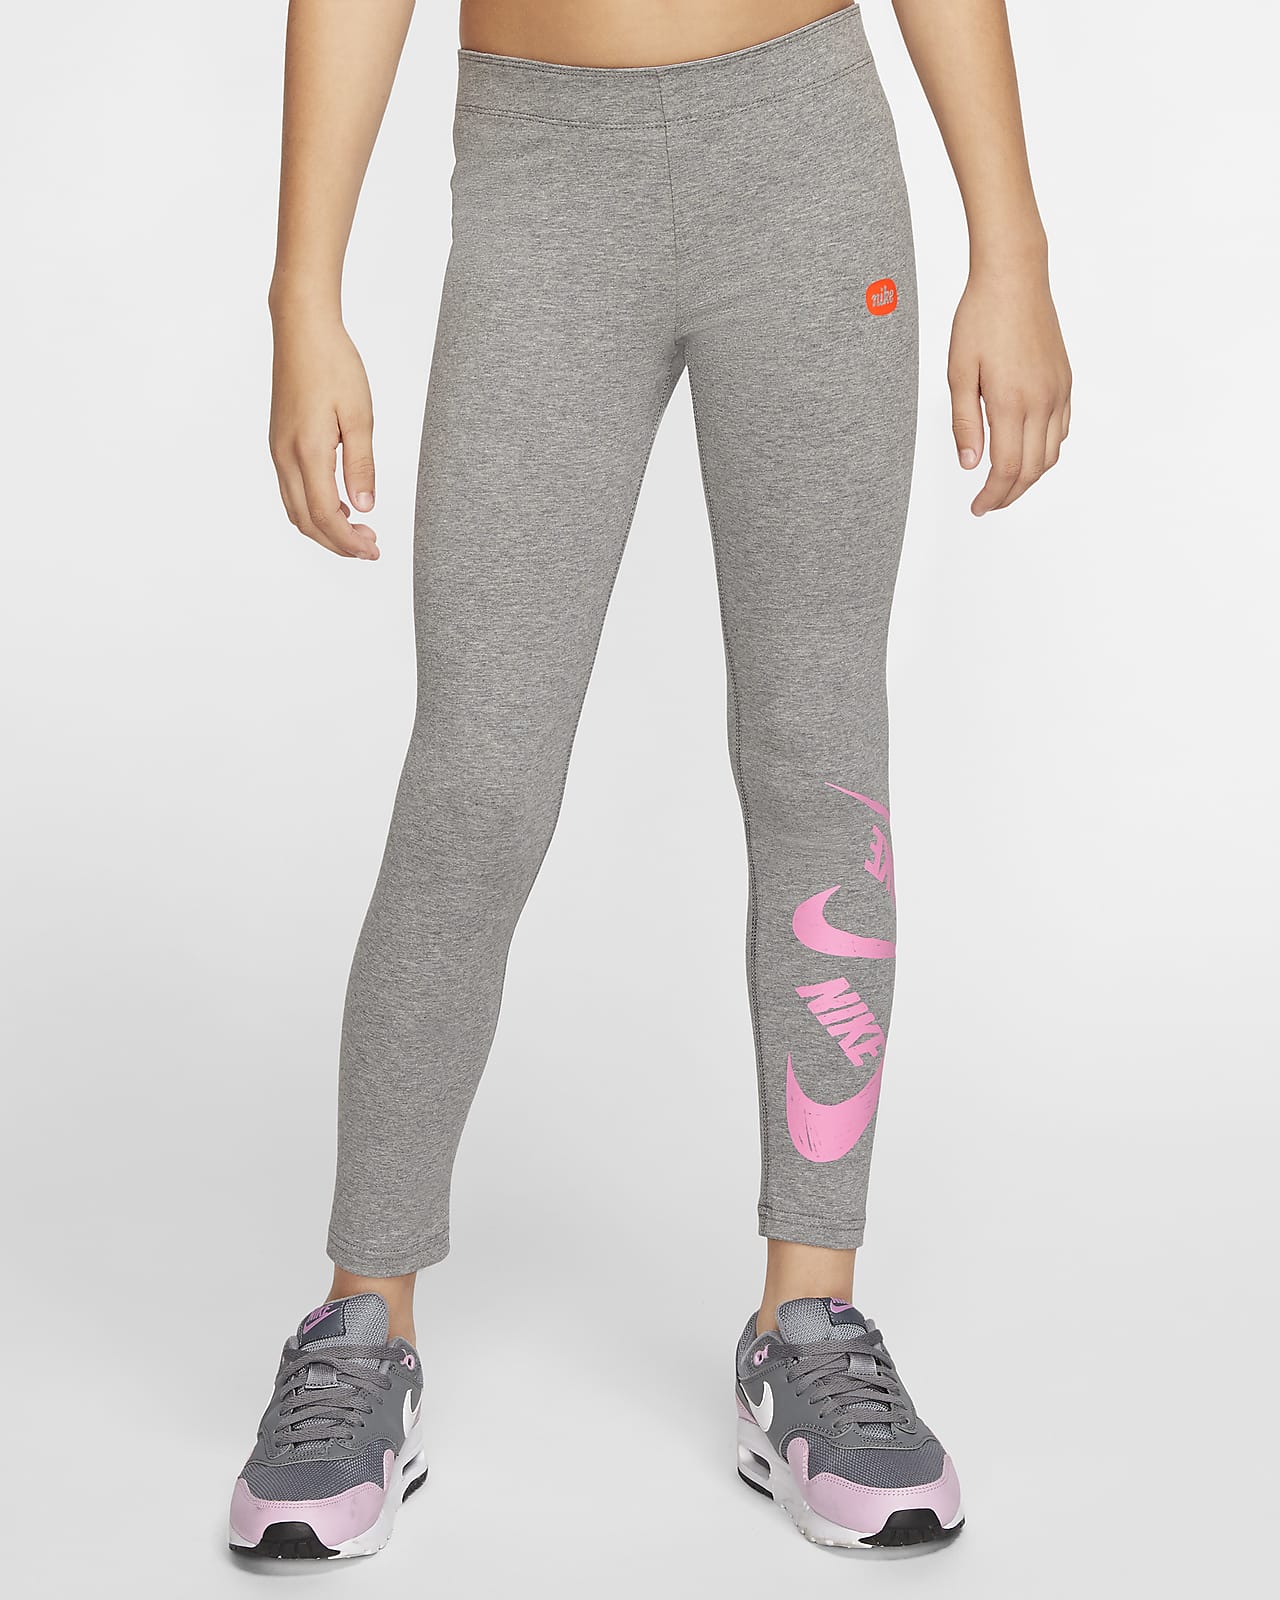 Nike Sportswear Kids Girls Leggings - Gray – Footkorner